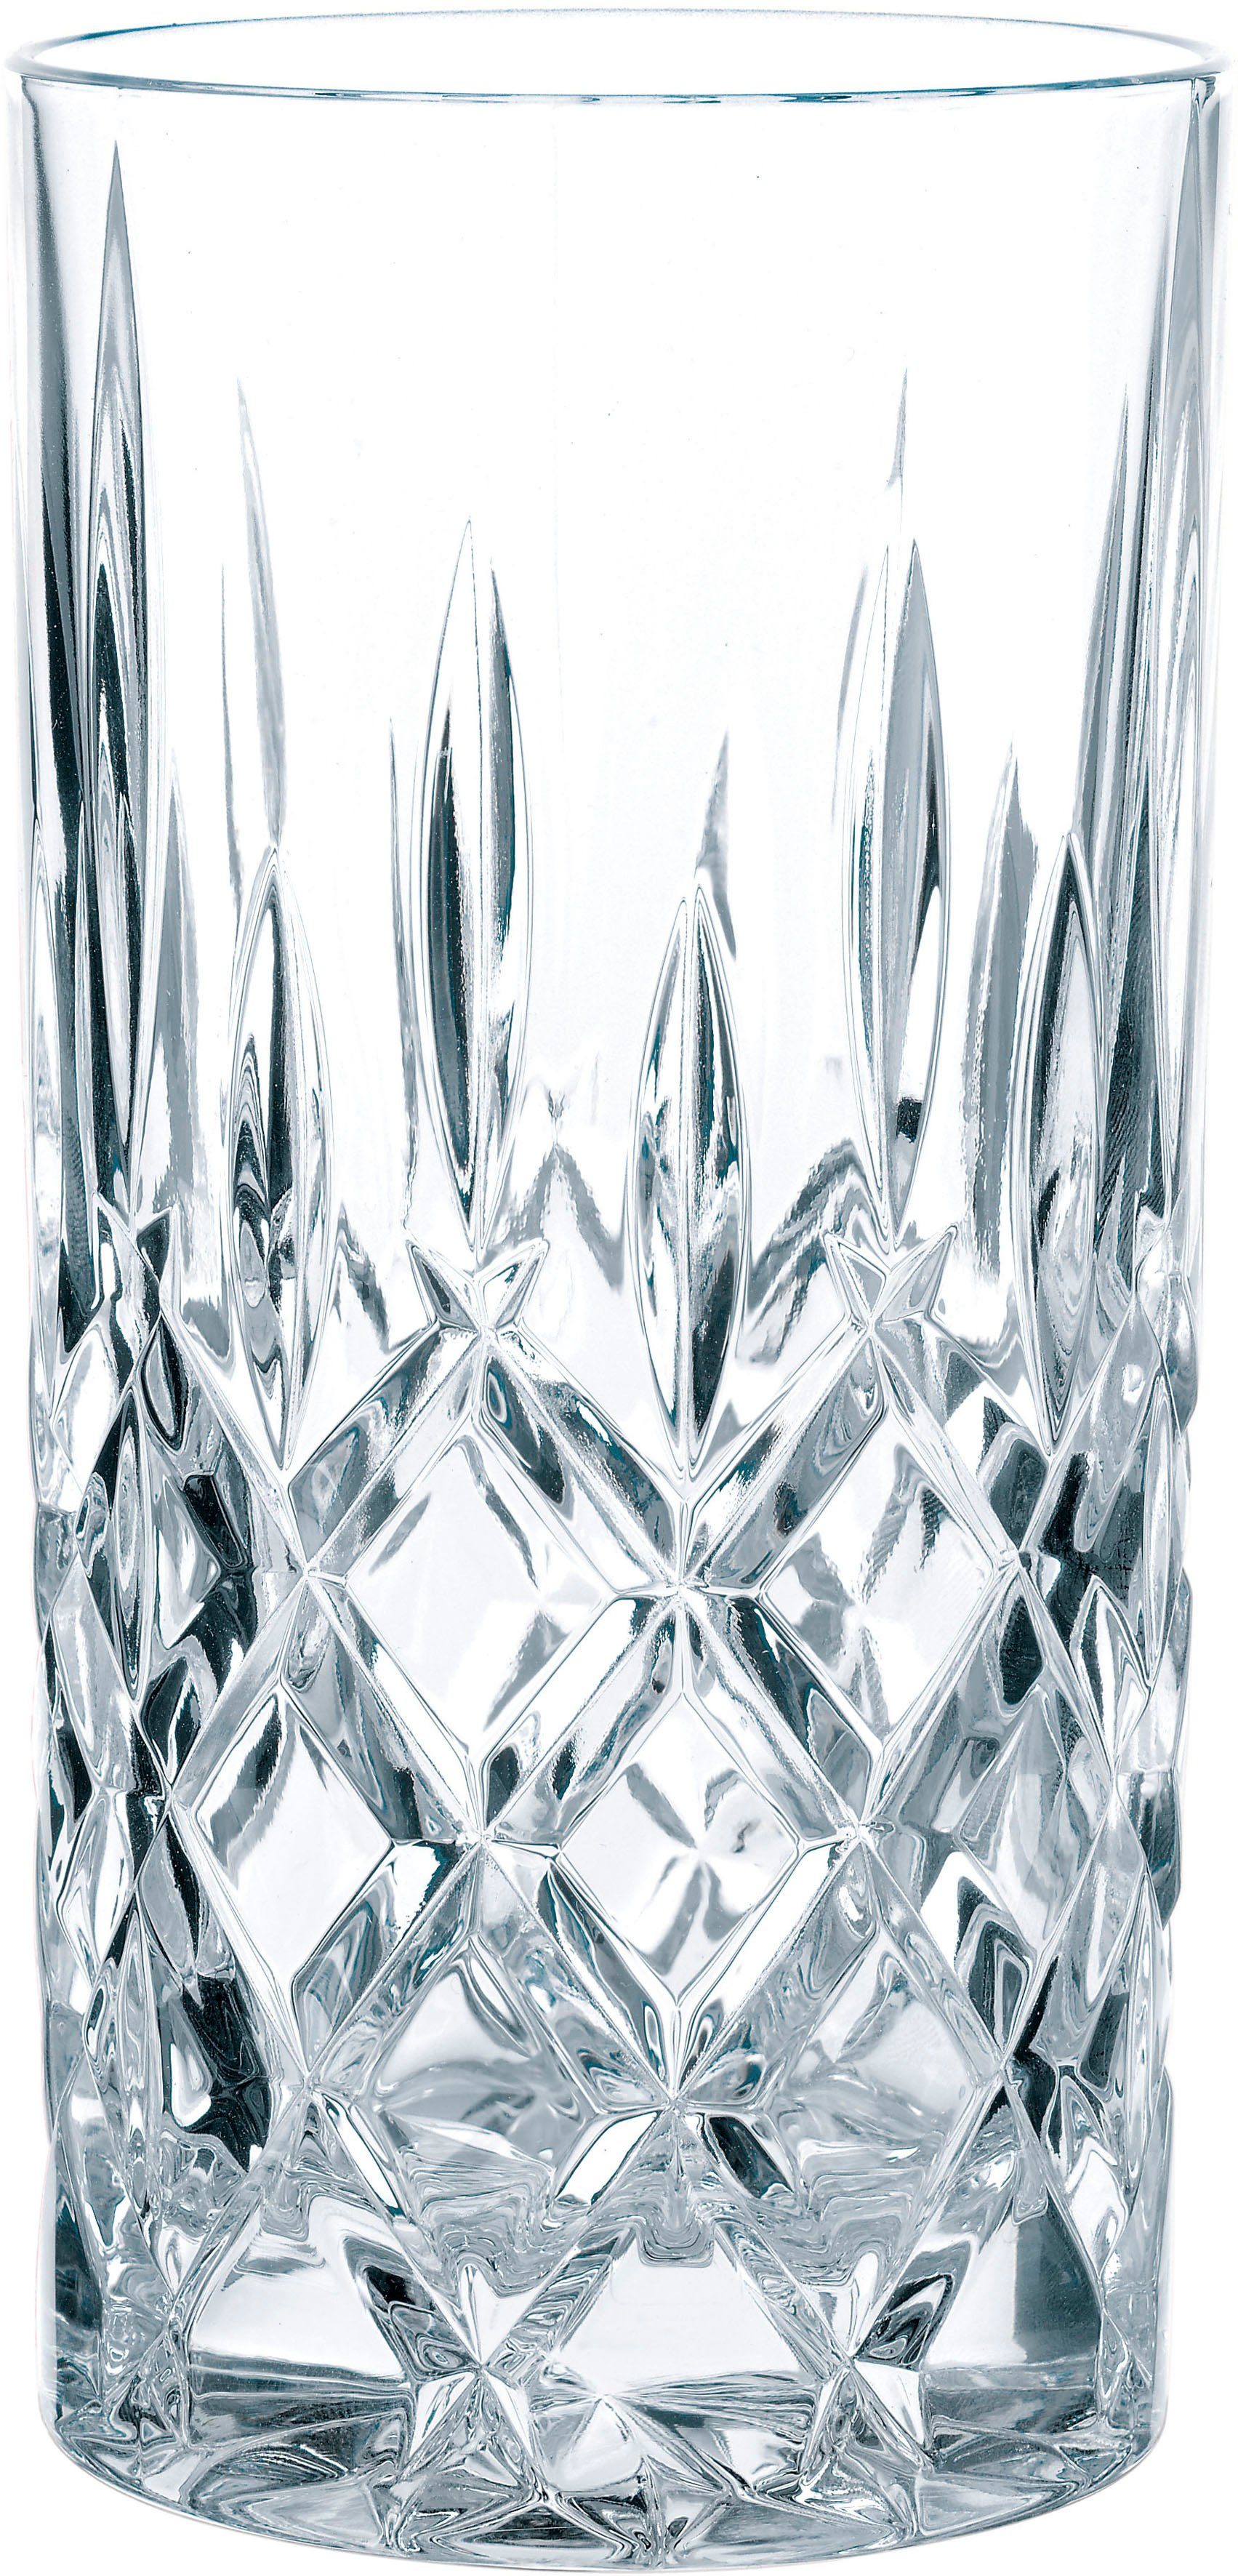 Nachtmann Longdrinkglas Noblesse, Kristallglas, Made in Germany, 395 ml, 6-teilig | Gläser